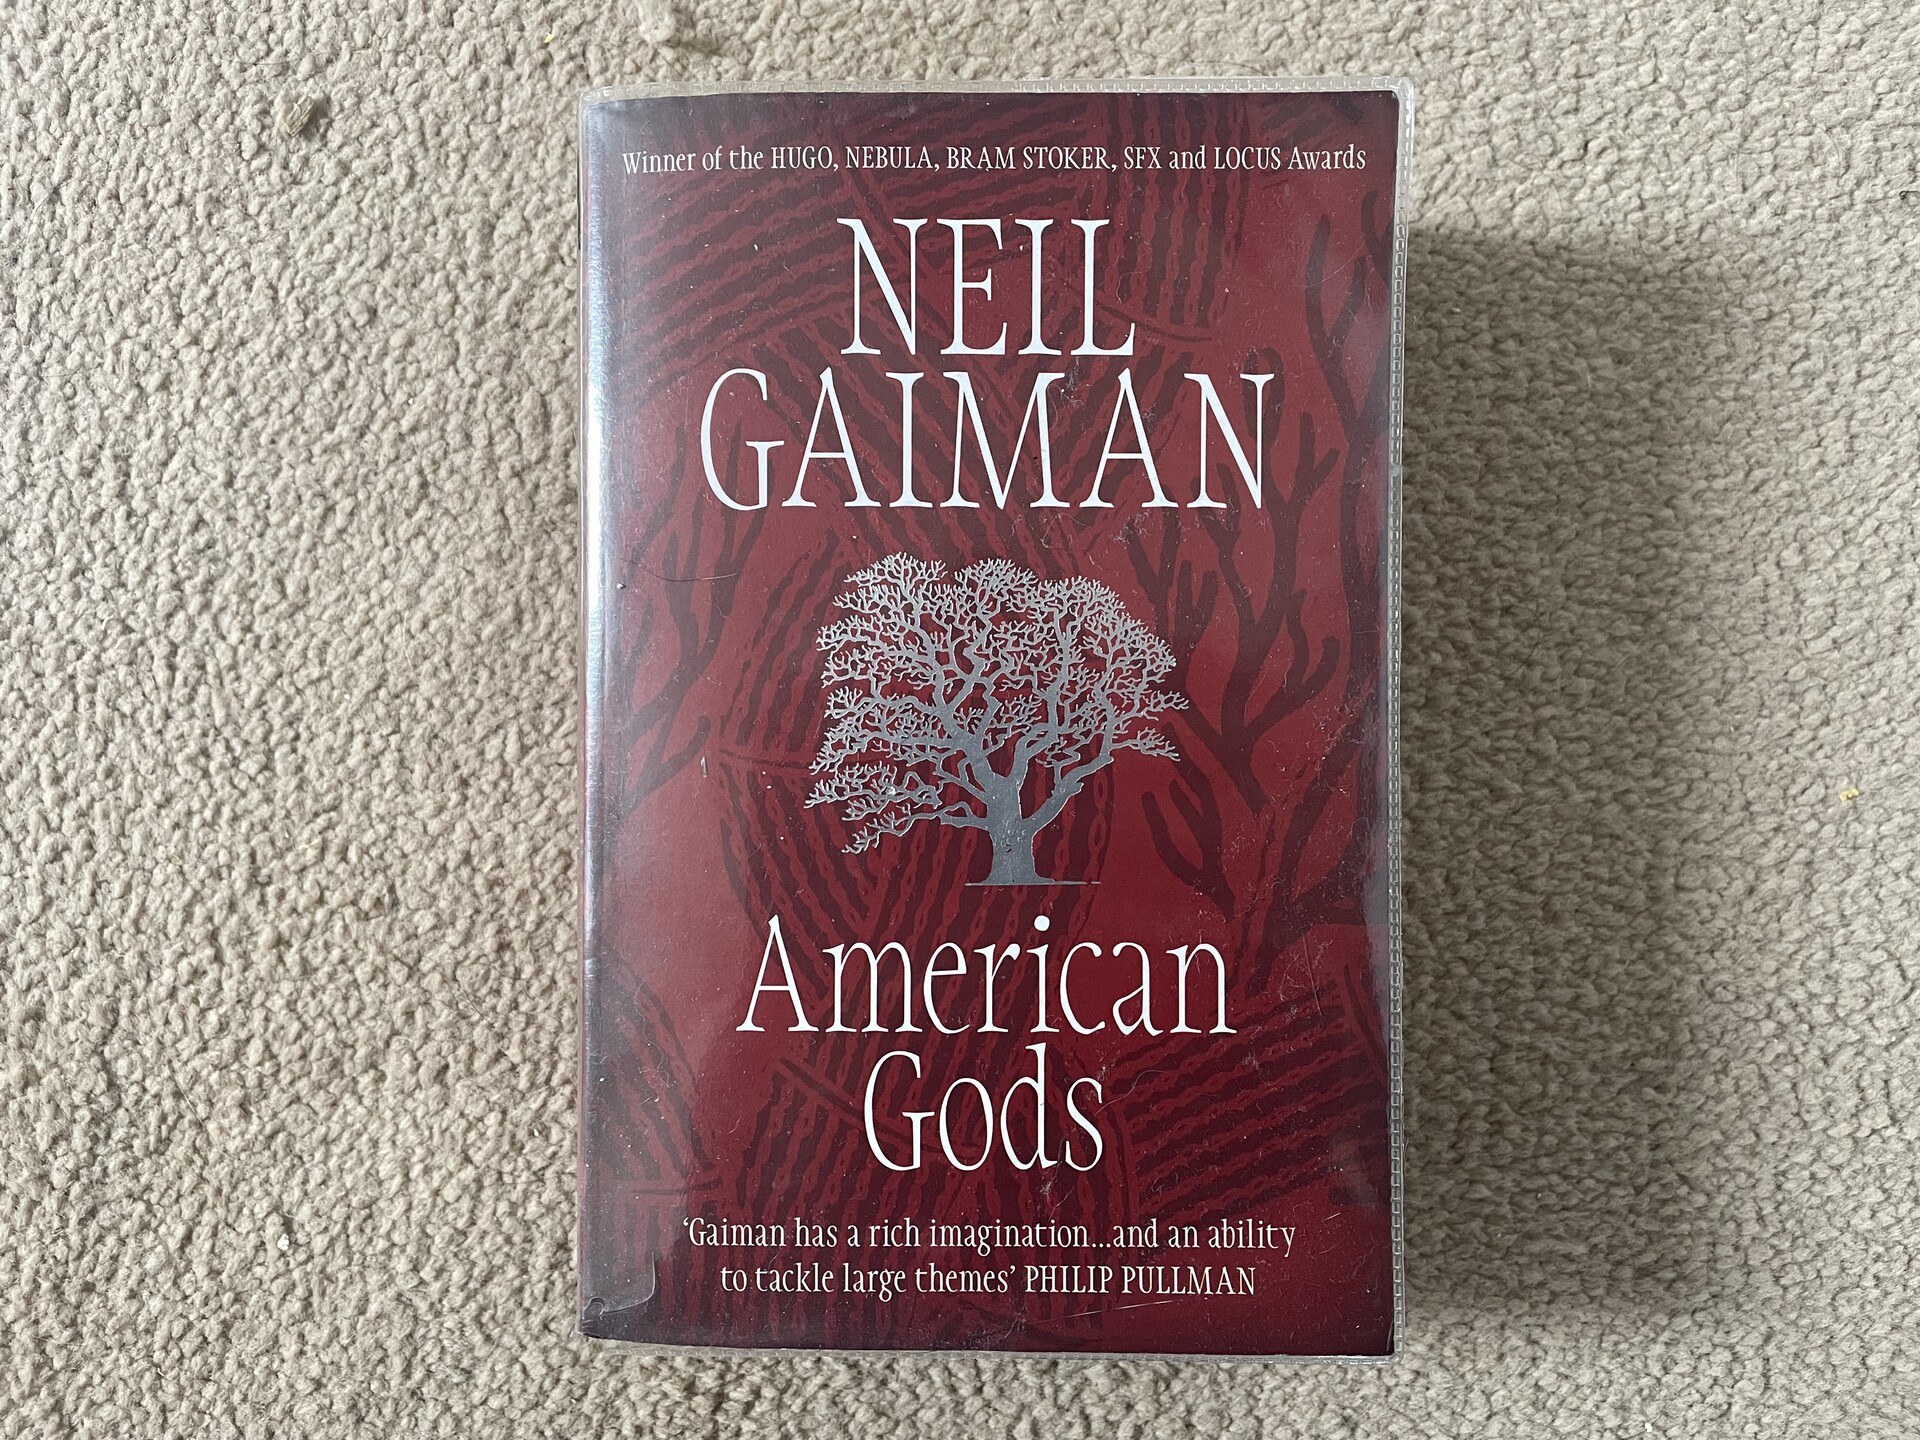 American Gods, by Neil Gaiman